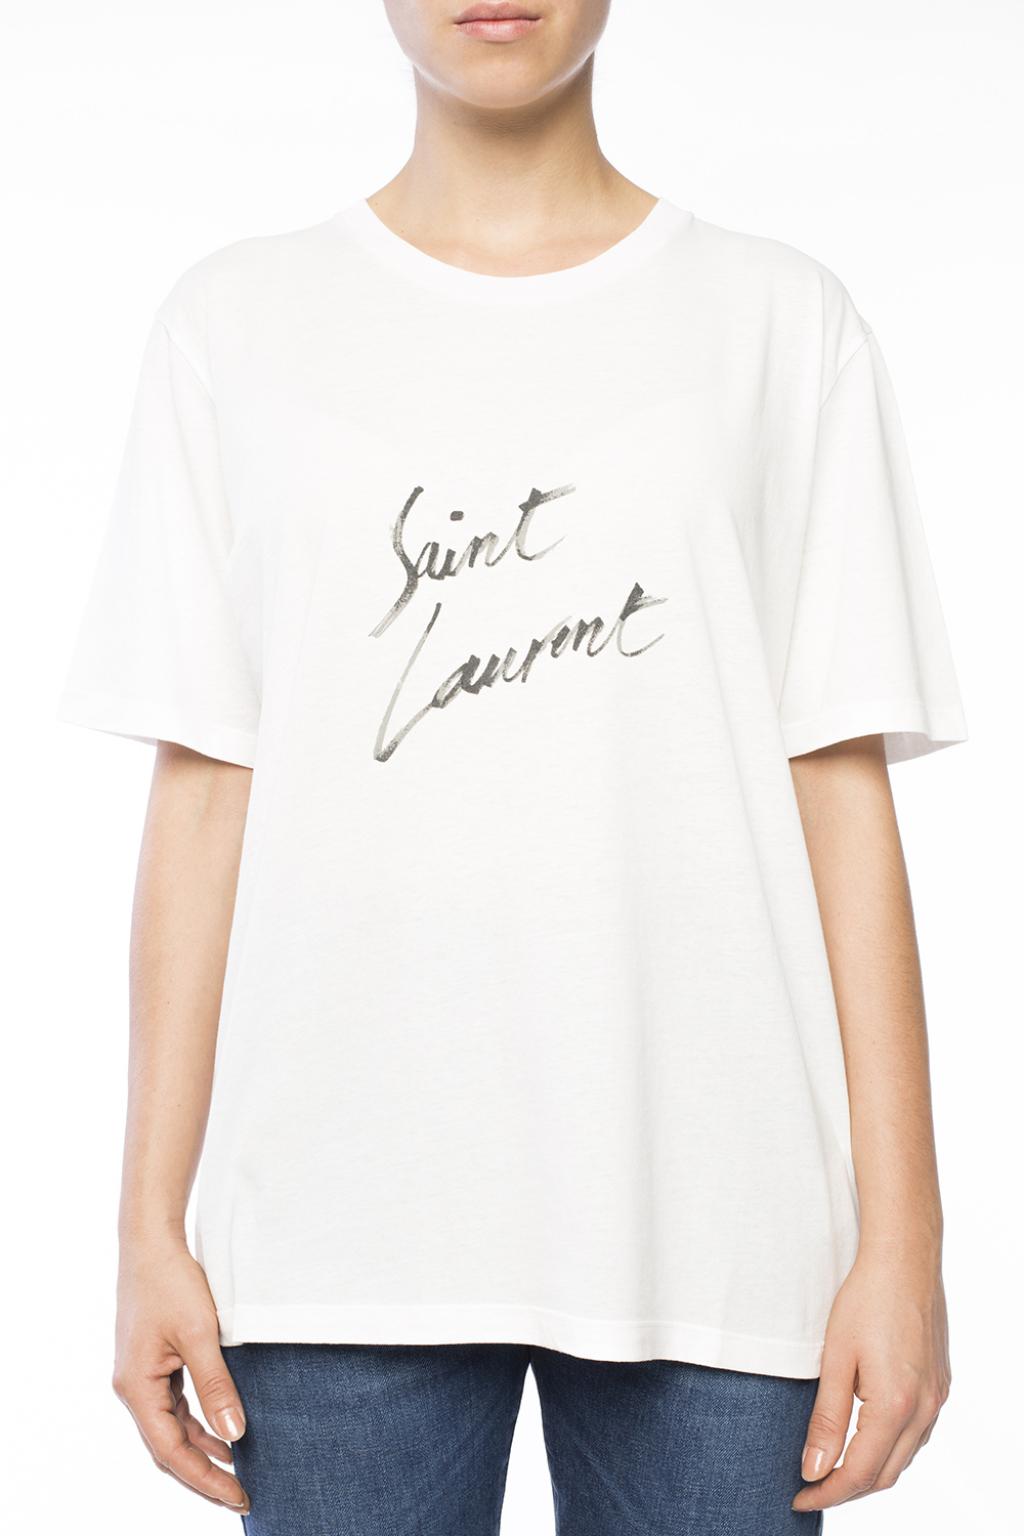 Saint Laurent Logo T shirt   Women's Clothing   Vitkac